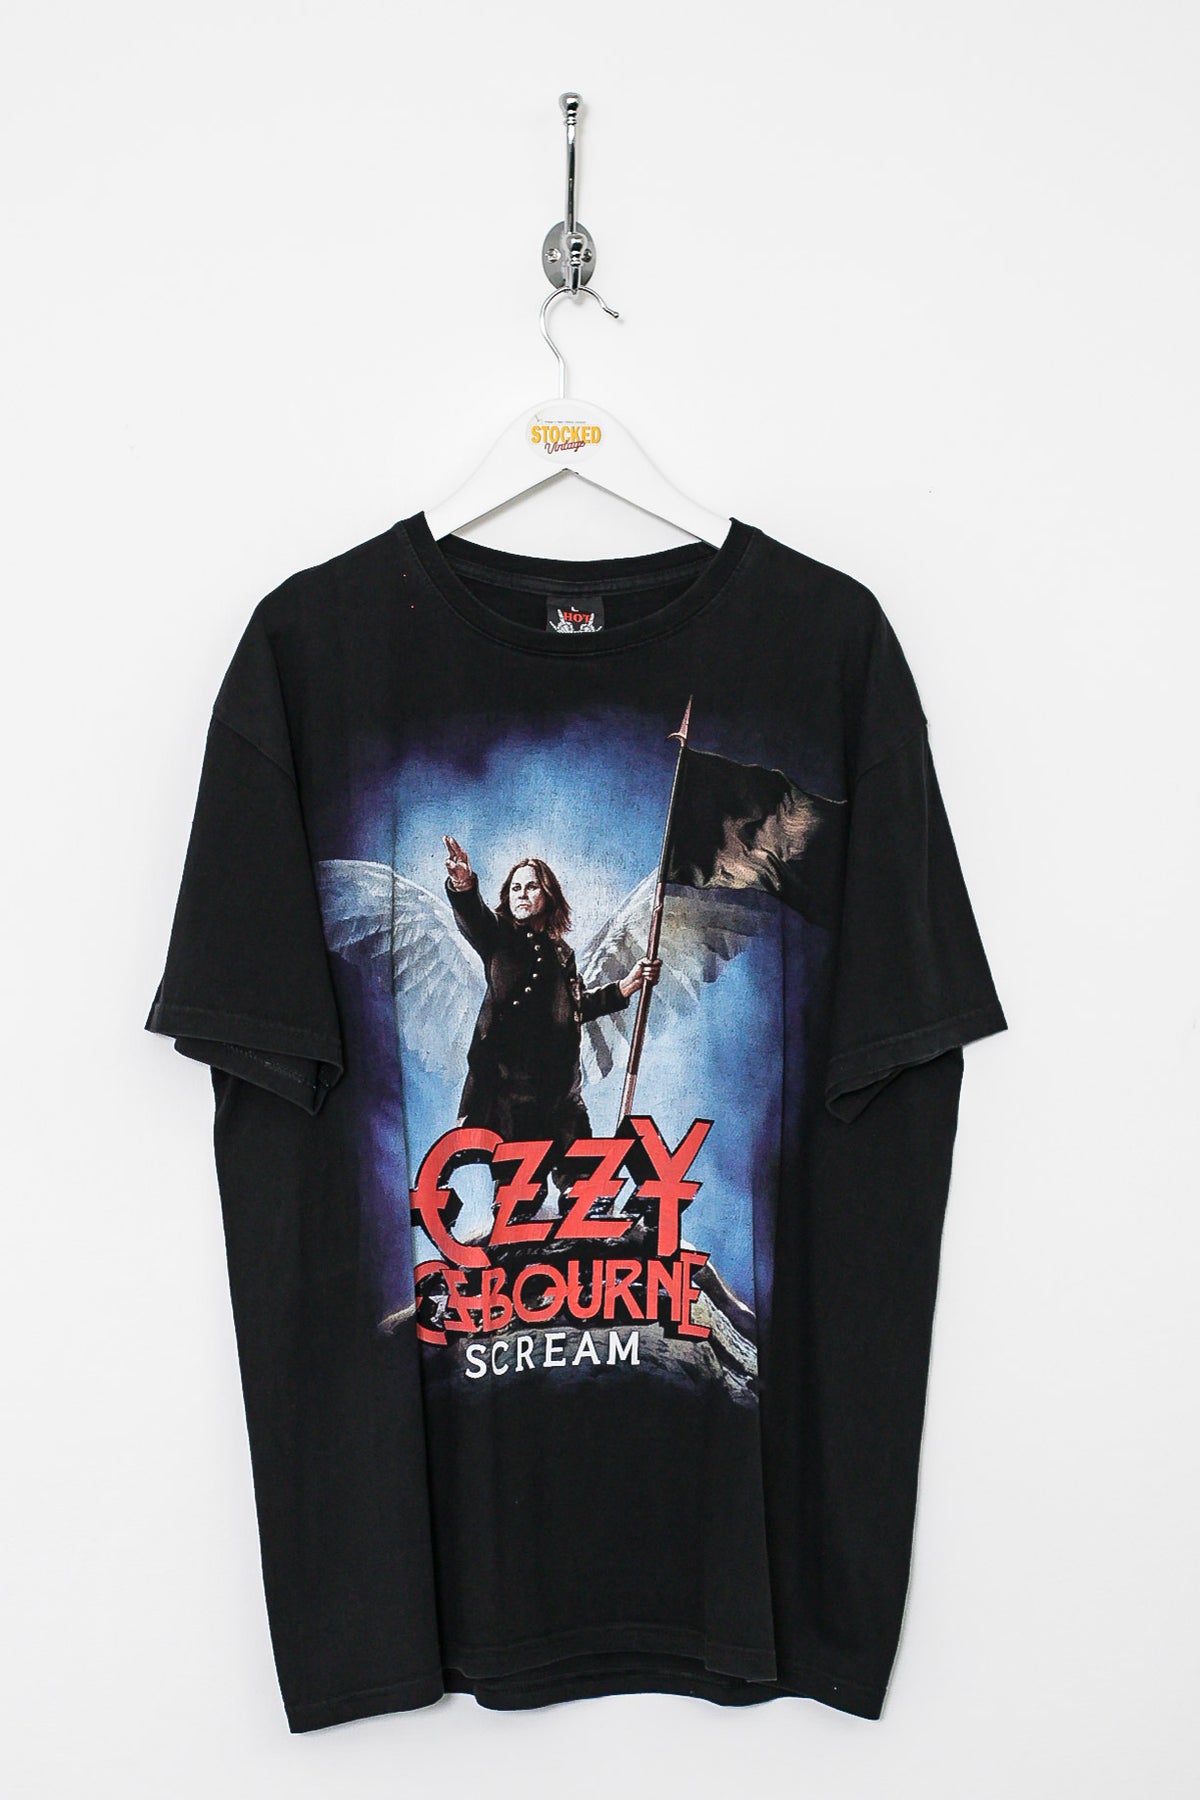 00s Ozzy Osbourne Scream Graphic Tee (L)